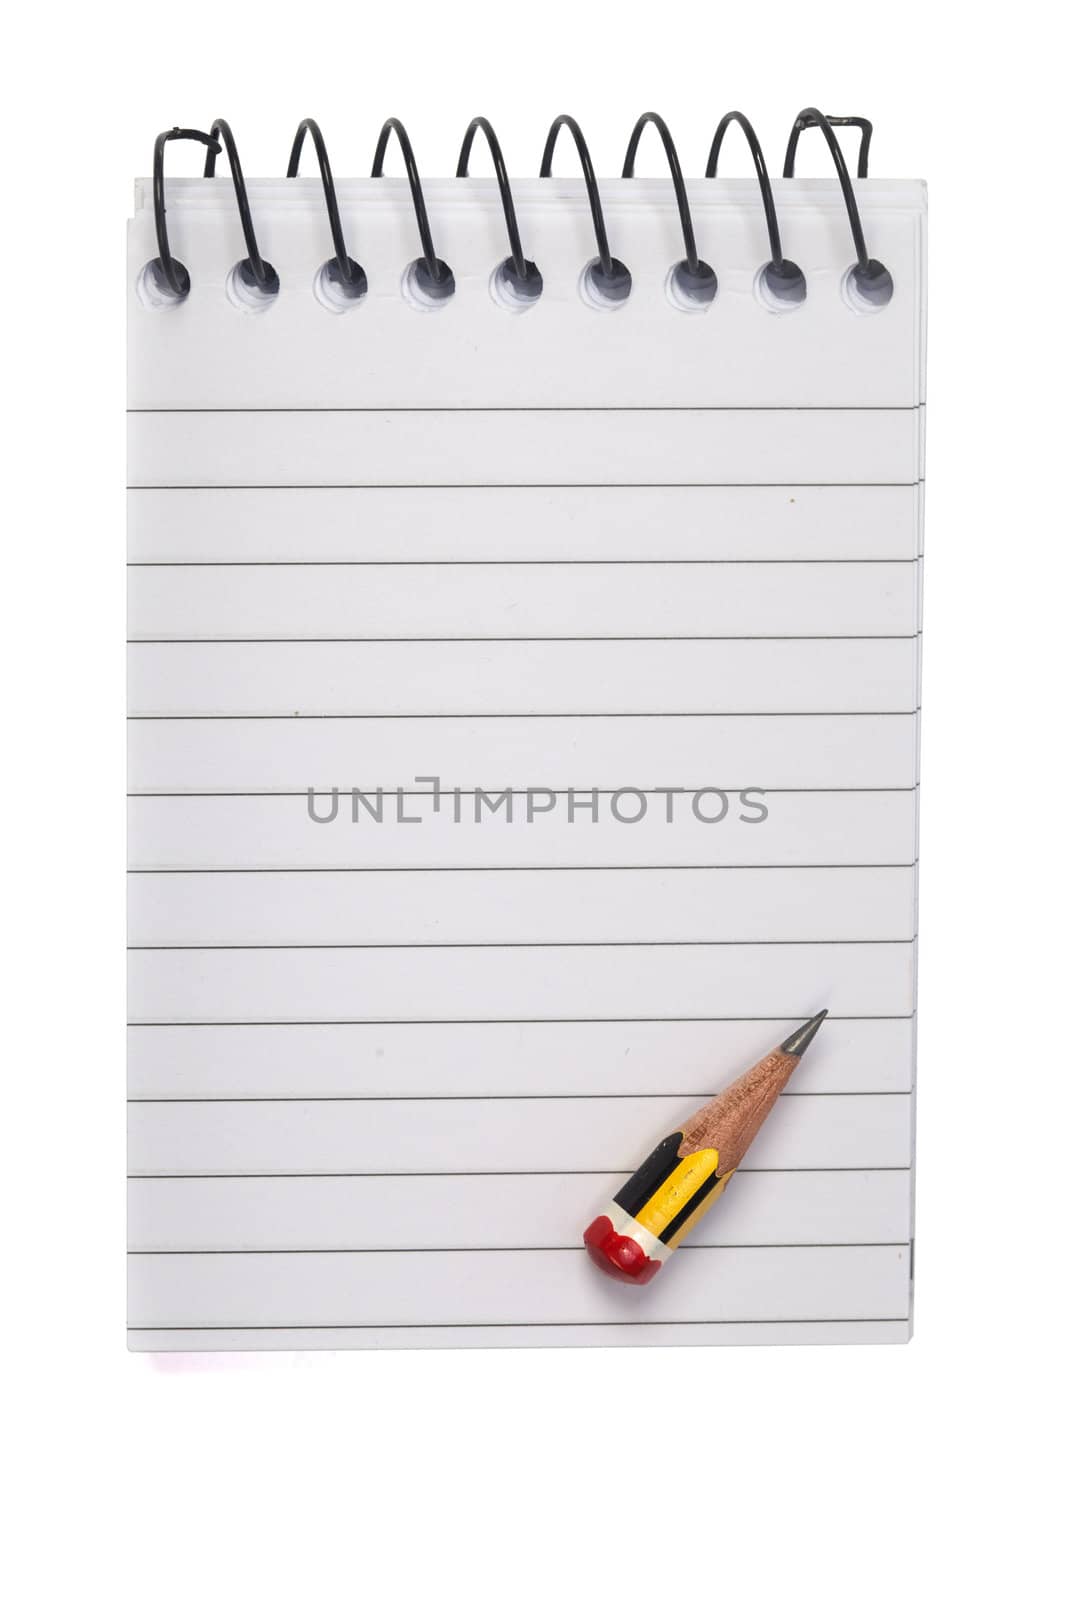 Pencil on Notepad by Daniel_Wiedemann